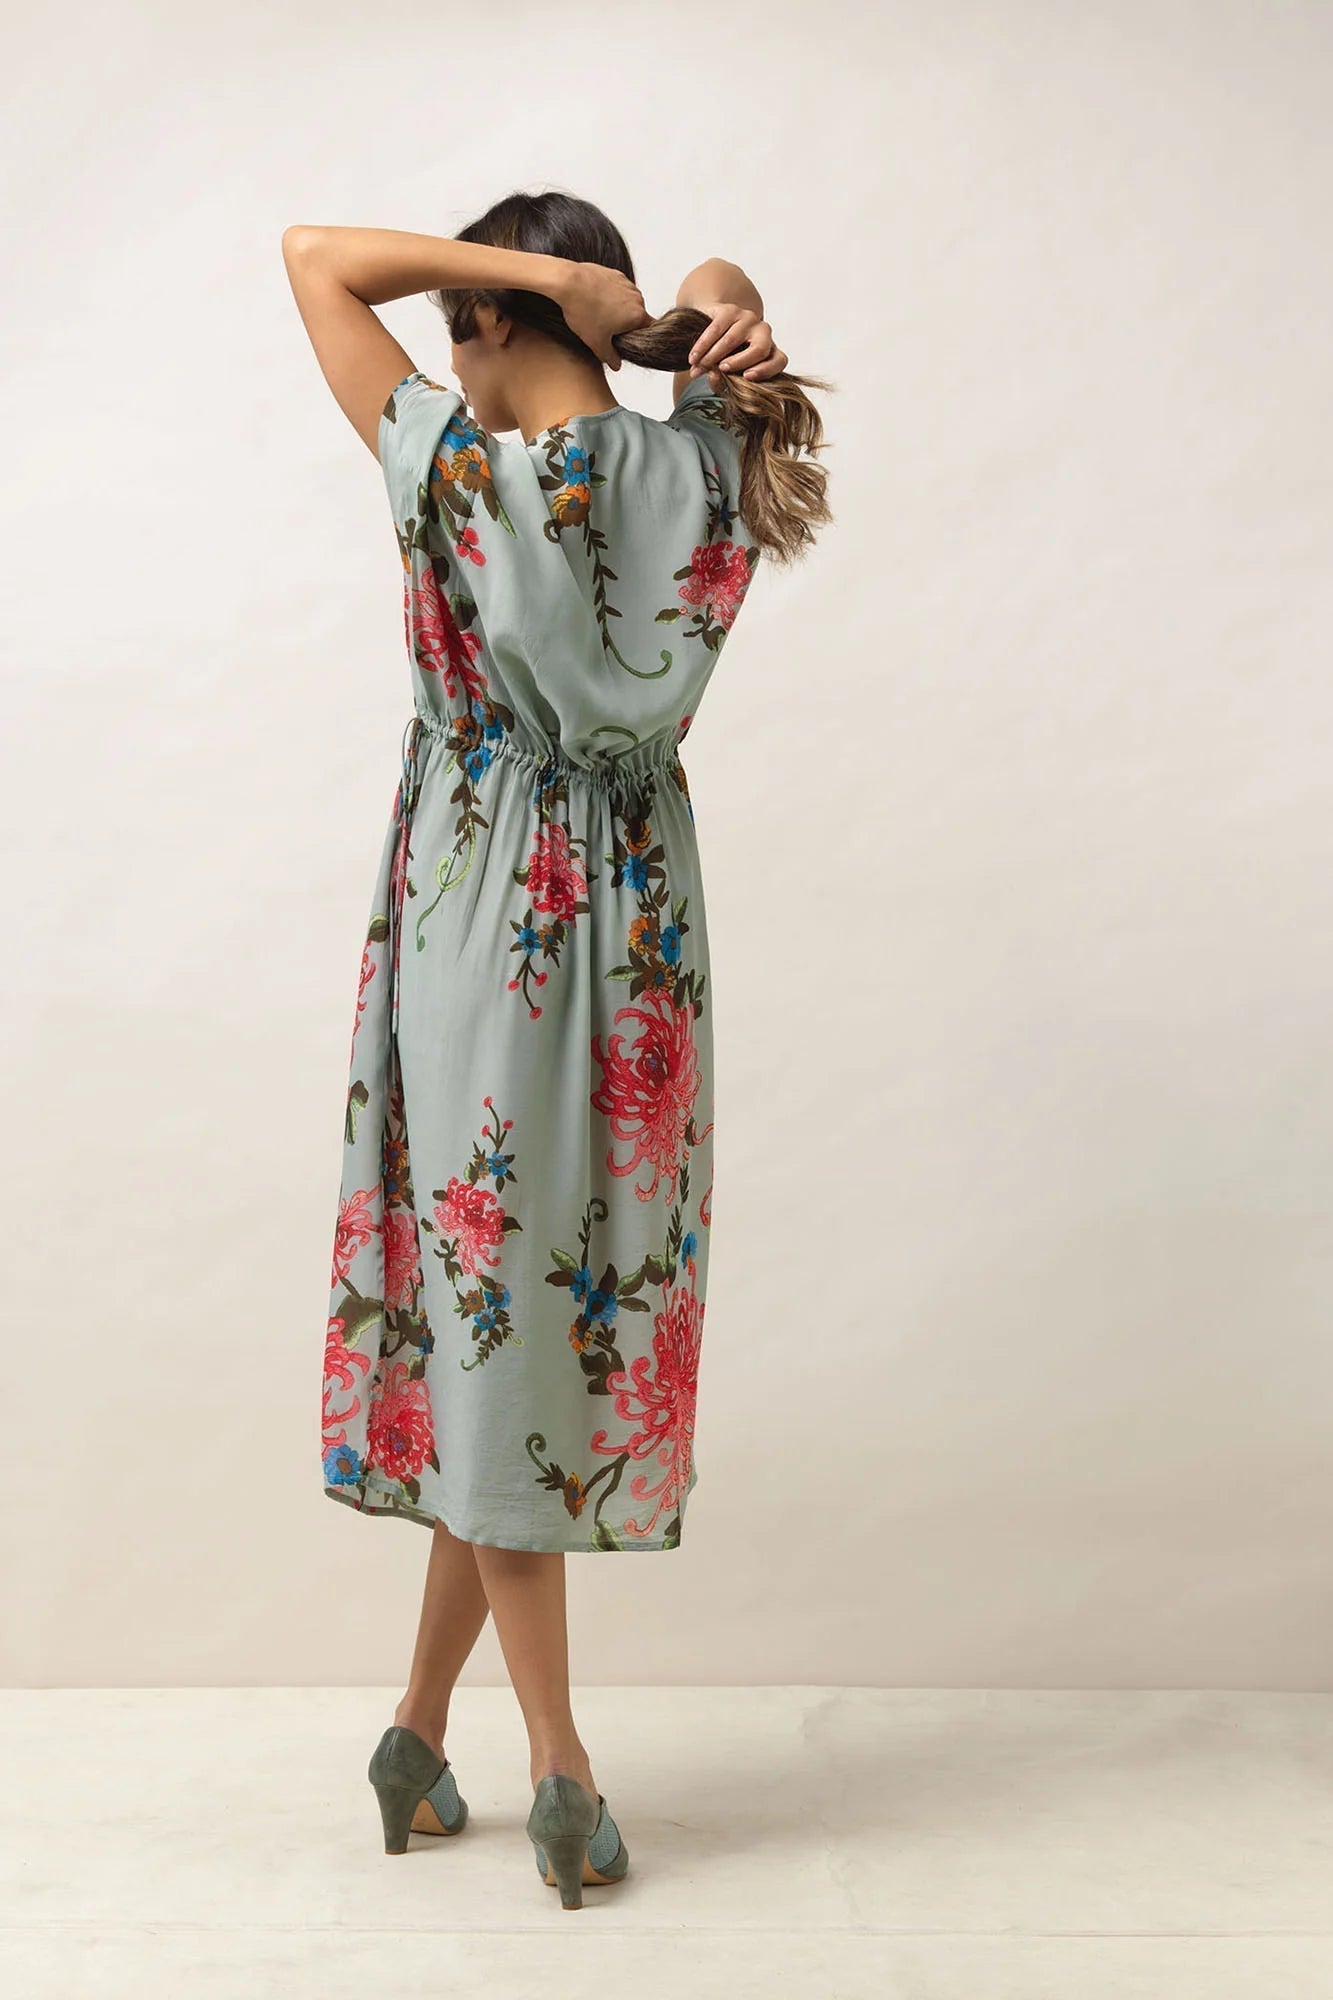 Aqua Chrysanthemum String Dress - The Nancy Smillie Shop - Art, Jewellery & Designer Gifts Glasgow